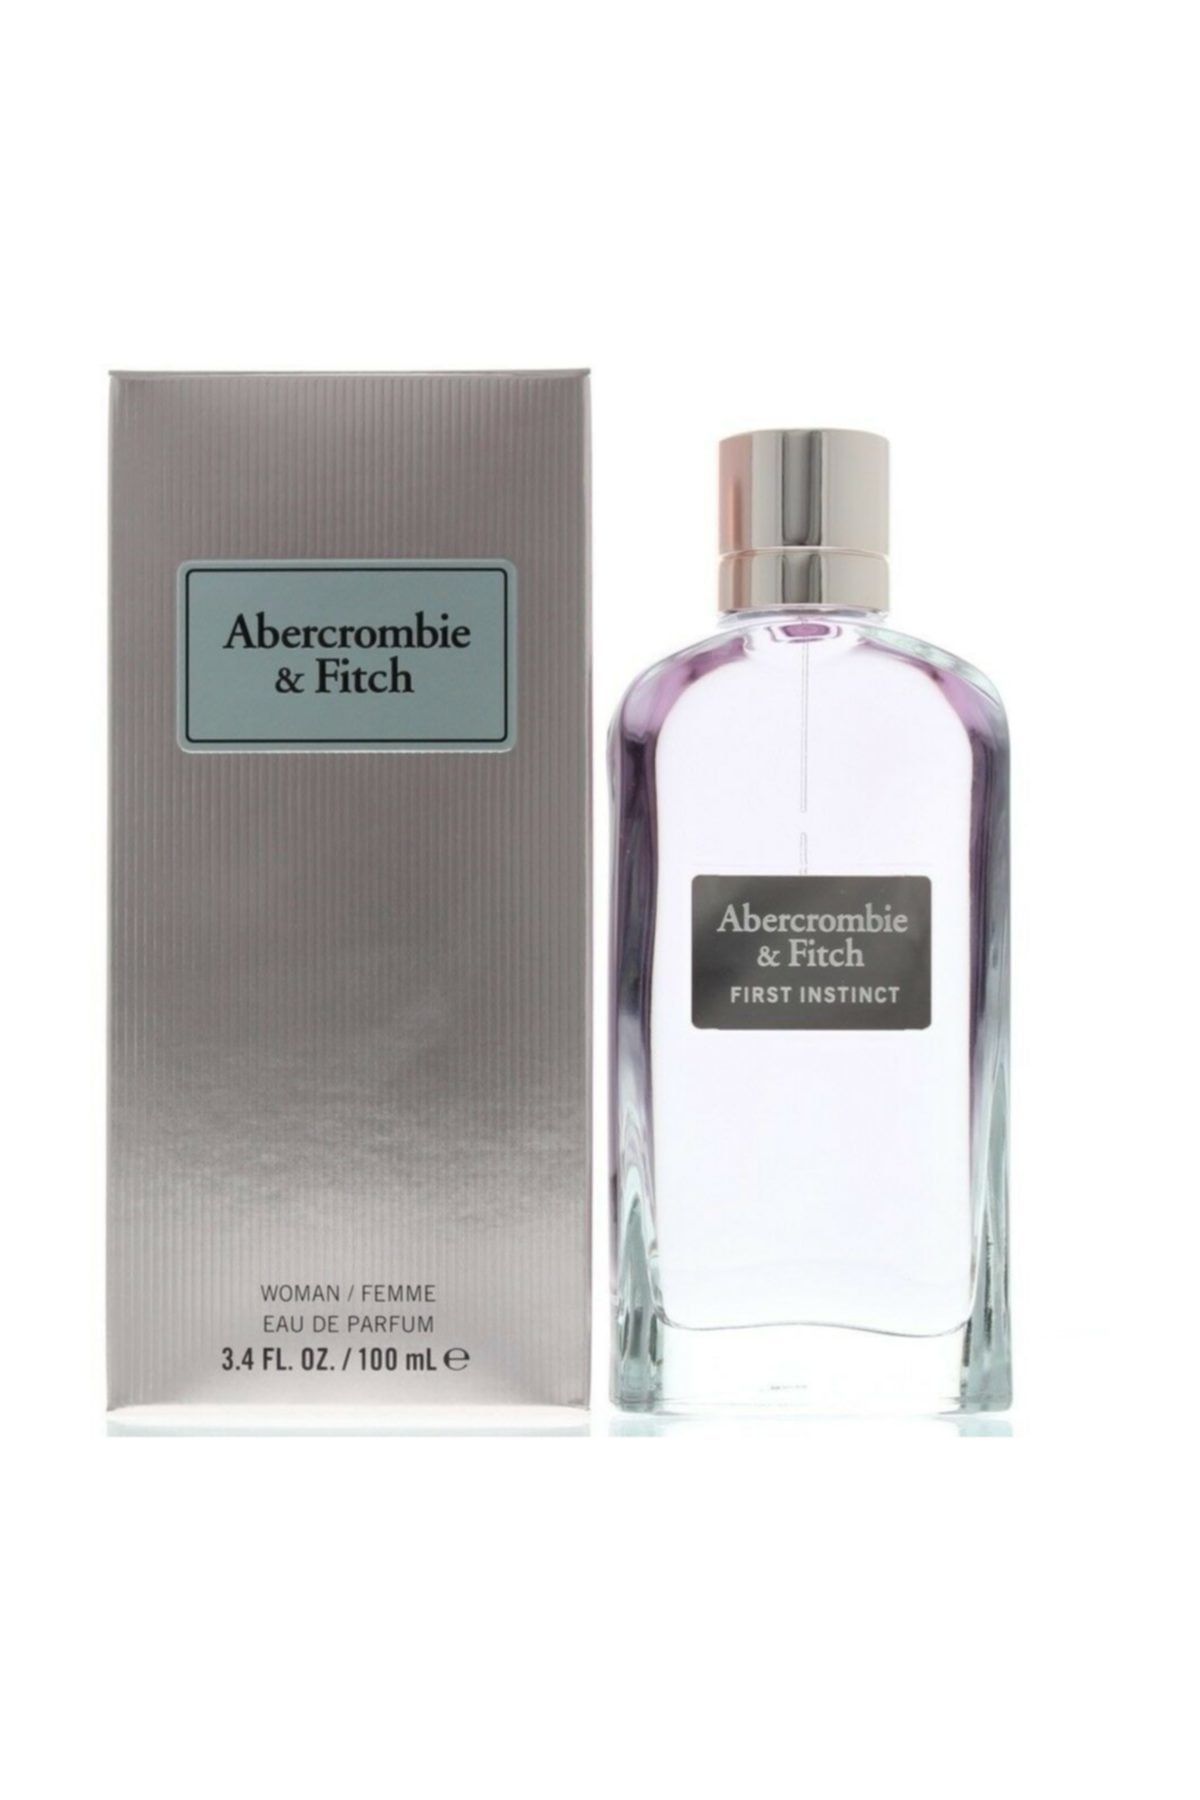 Abercrombie & Fitch Fırst Instinct Edp 100 ml Kadın Parfüm 85715163158